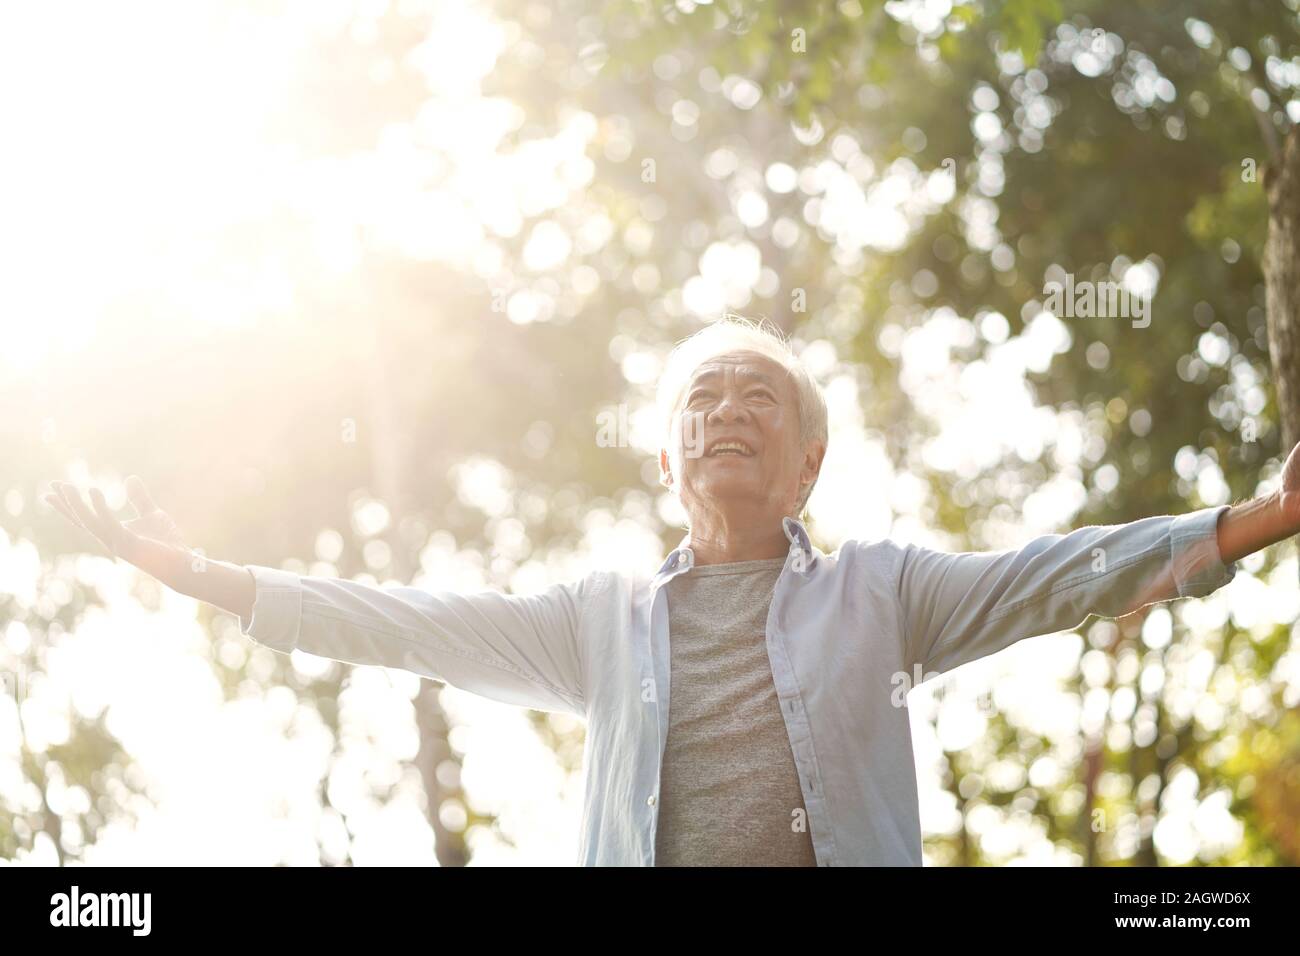 senior asian man enjoying fresh air walking with open arms outdoors in park Stock Photo